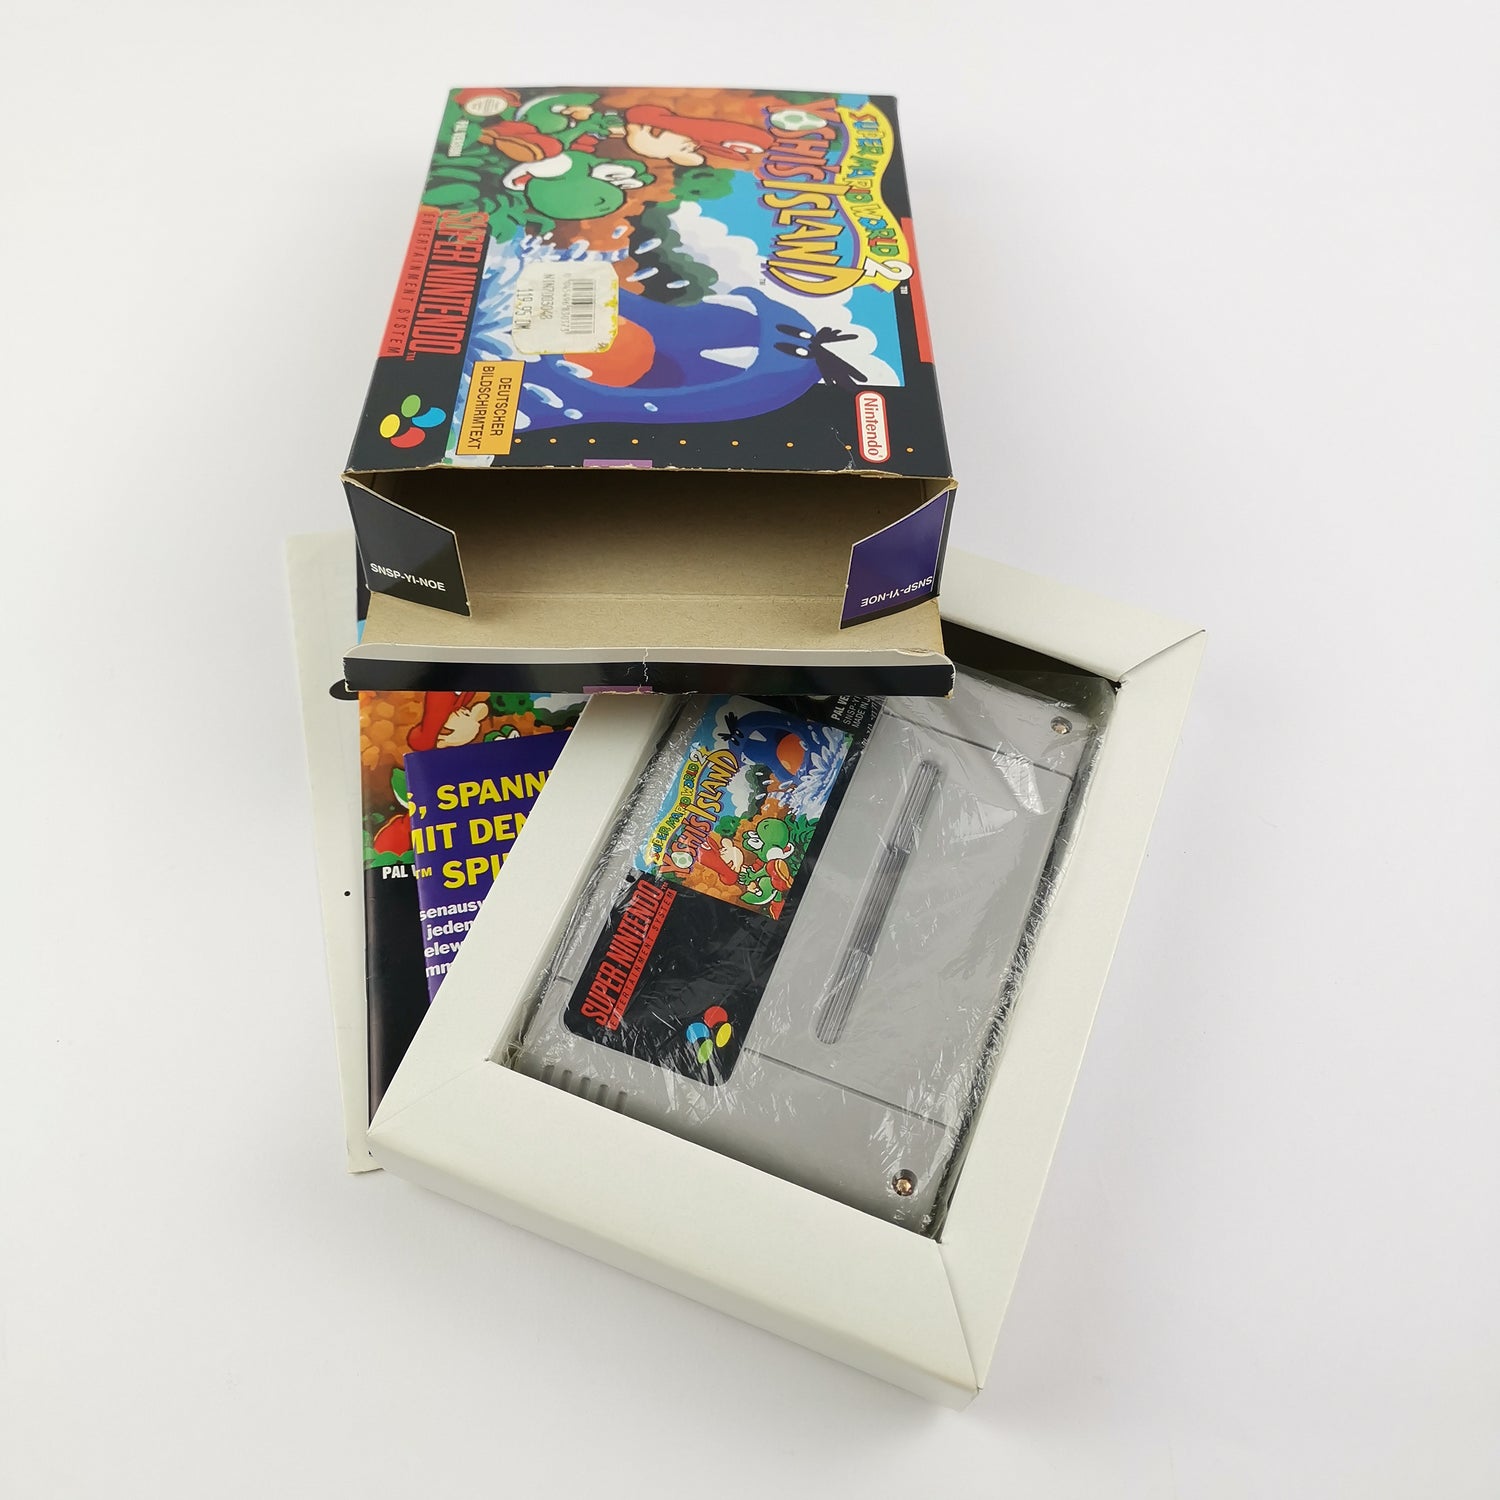 Super Nintendo game: SMW 2 Yoshi's Island - original packaging & instructions PAL SNES cartridge